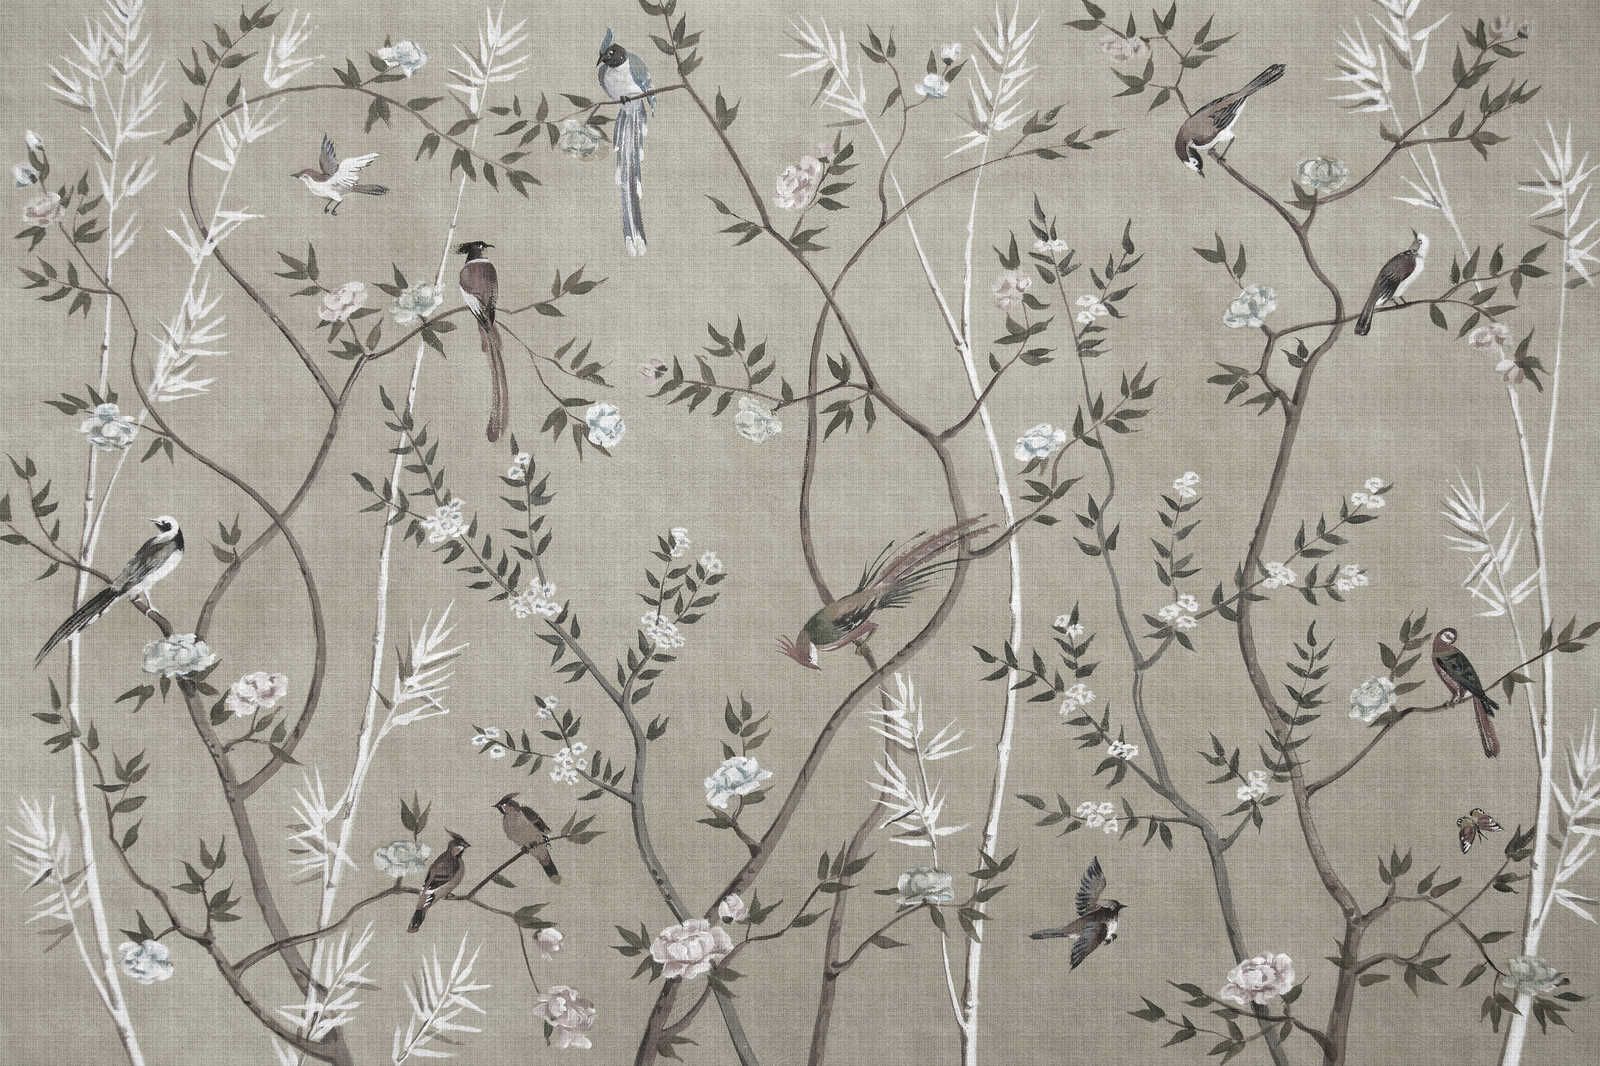             Tea Room 2 - Canvas painting Birds & Flowers Design in Greige - 0,90 m x 0,60 m
        